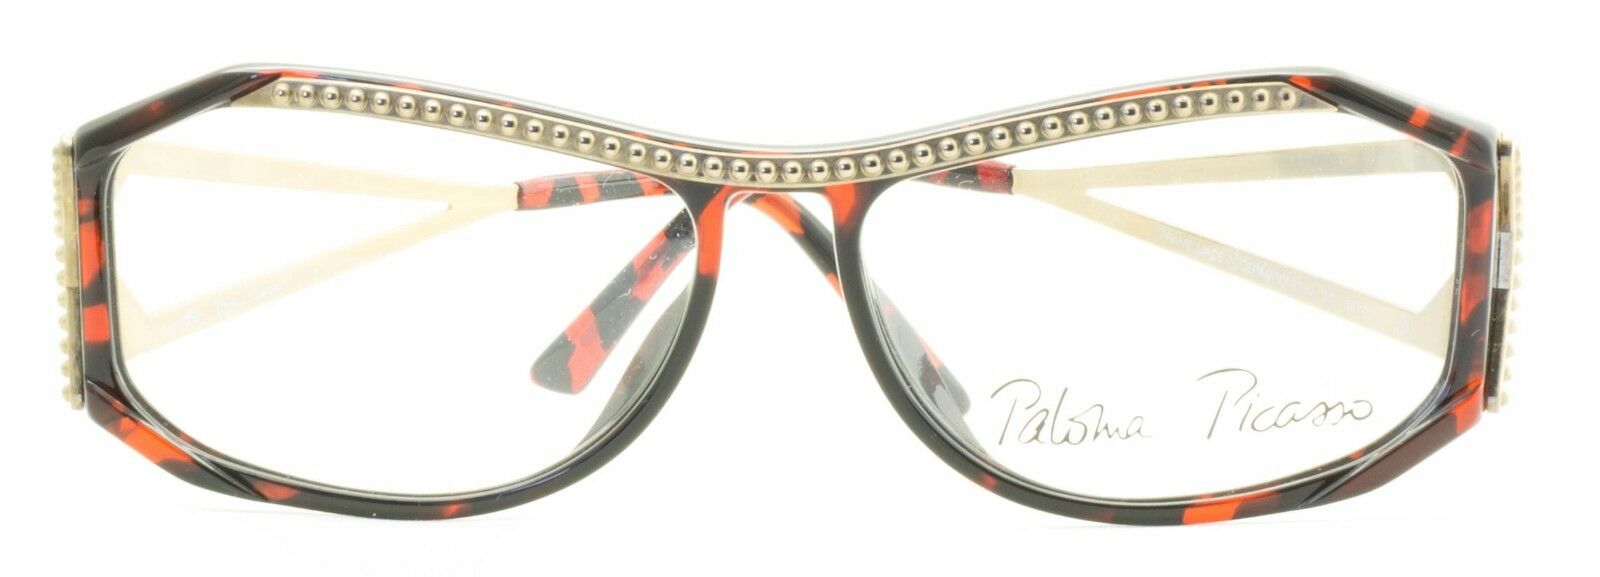 PALOMA PICASSO 3739 30 Vintage FRAMES Glasses RX Optical Eyewear Eyeglasses NOS